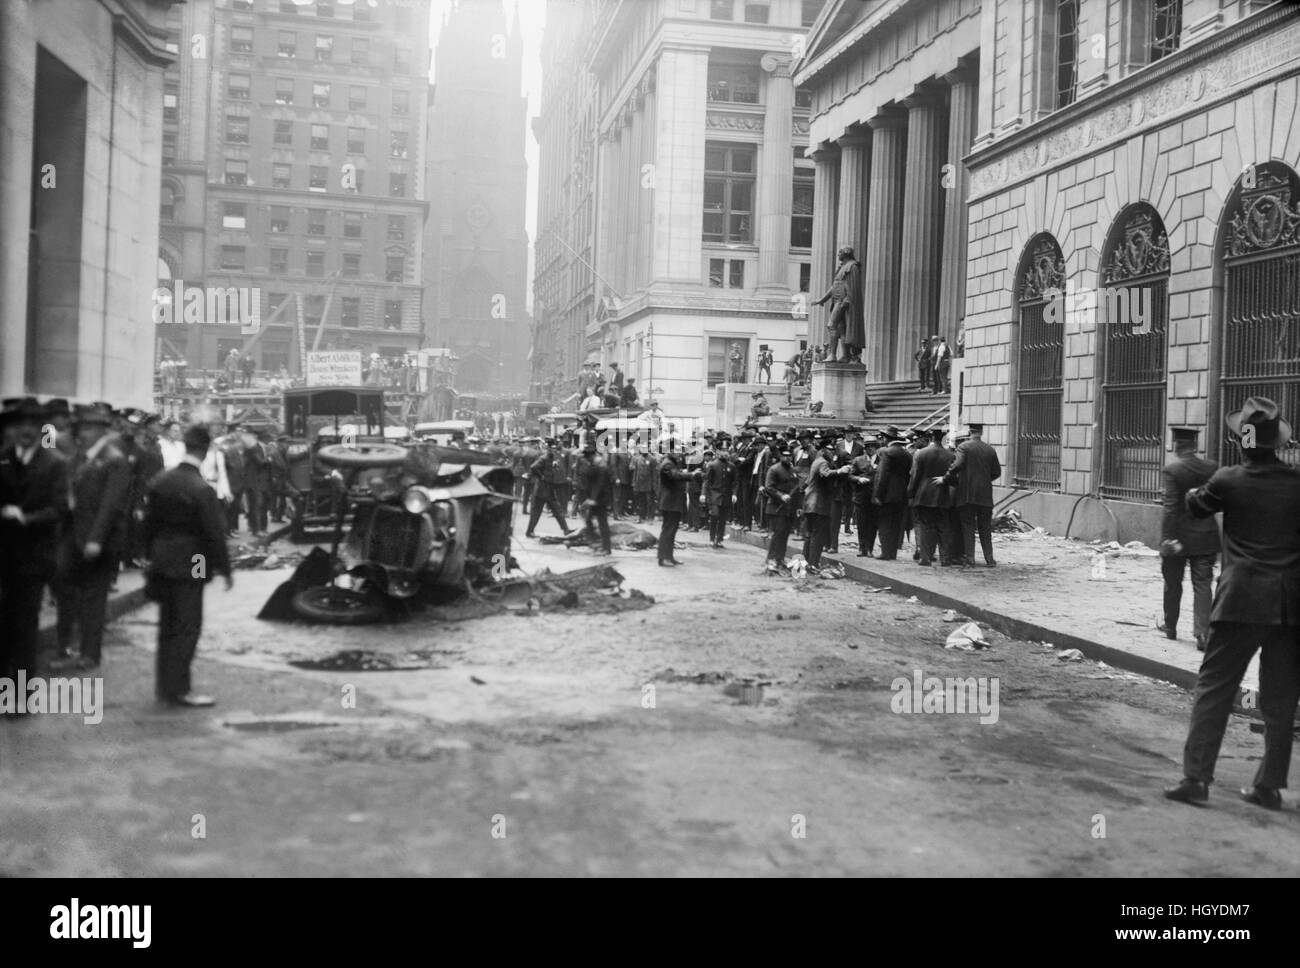 Damage from Terrorist Bomb Explosion, Wall Street, New York City, New York, USA, Bain News Service, September 16, 1920 Stock Photo